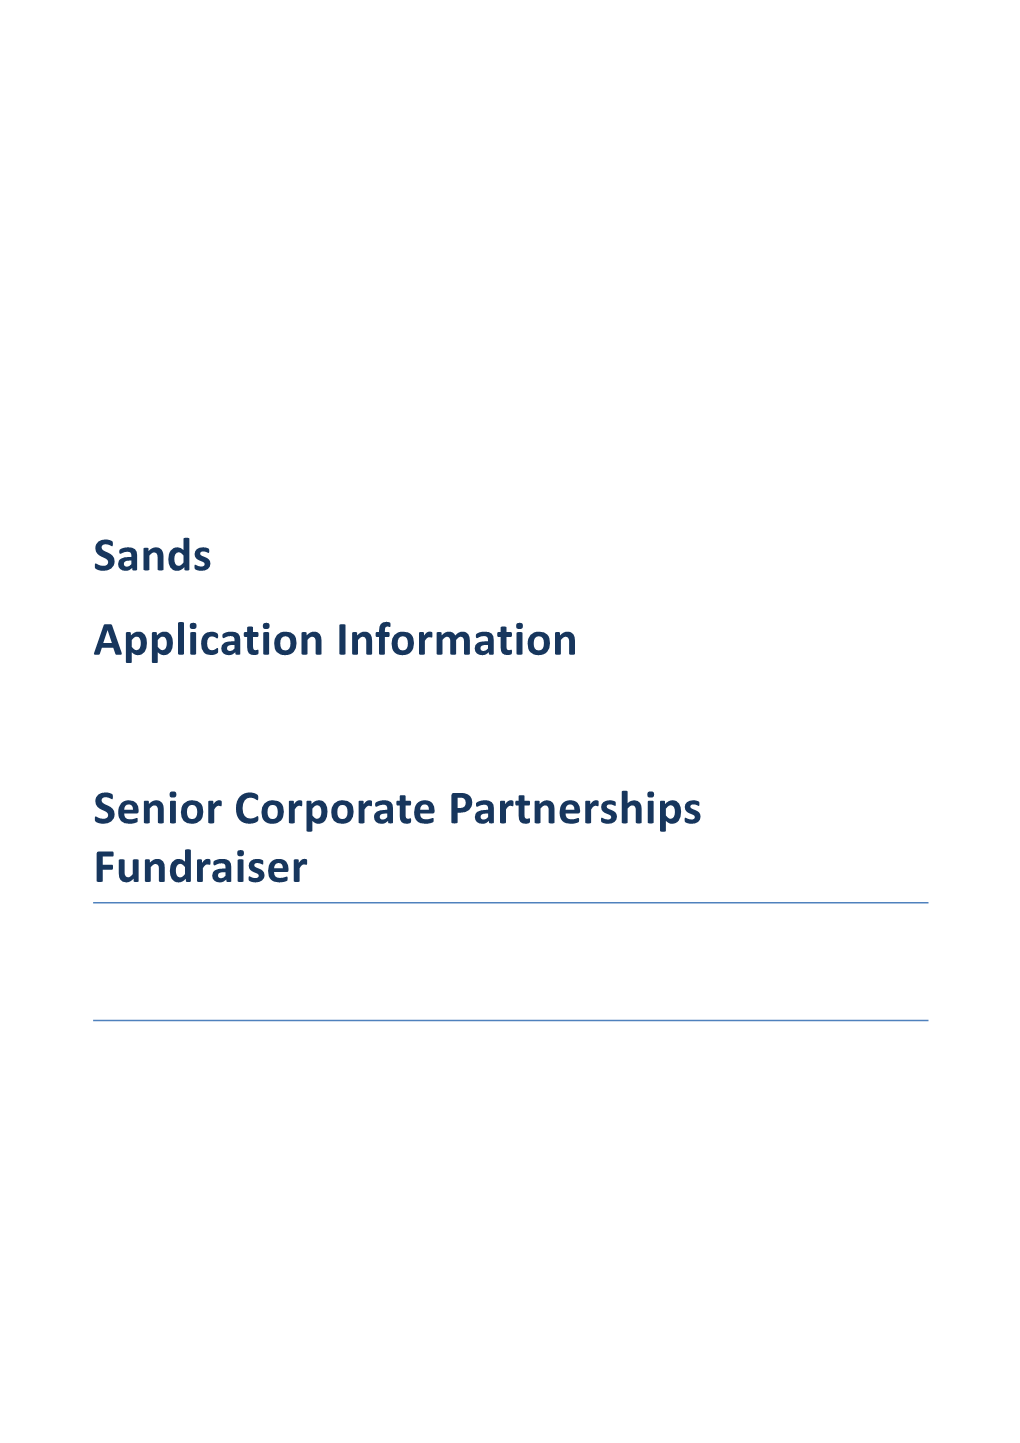 Senior Corporate Partnerships Fundraiser